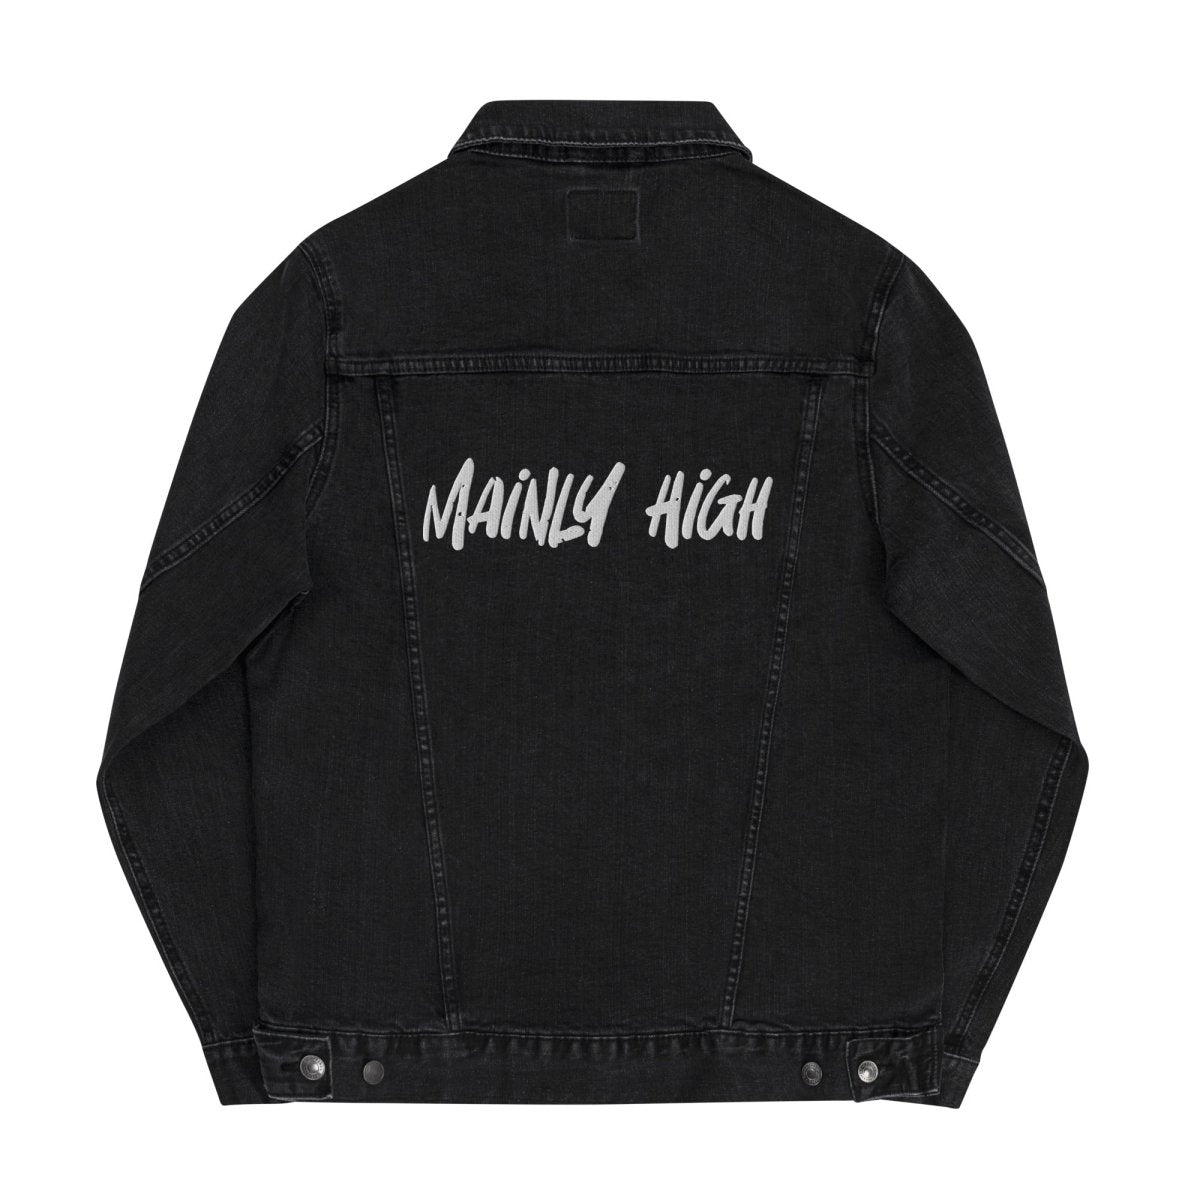 MH Classic Black Denim Jacket - Mainly High